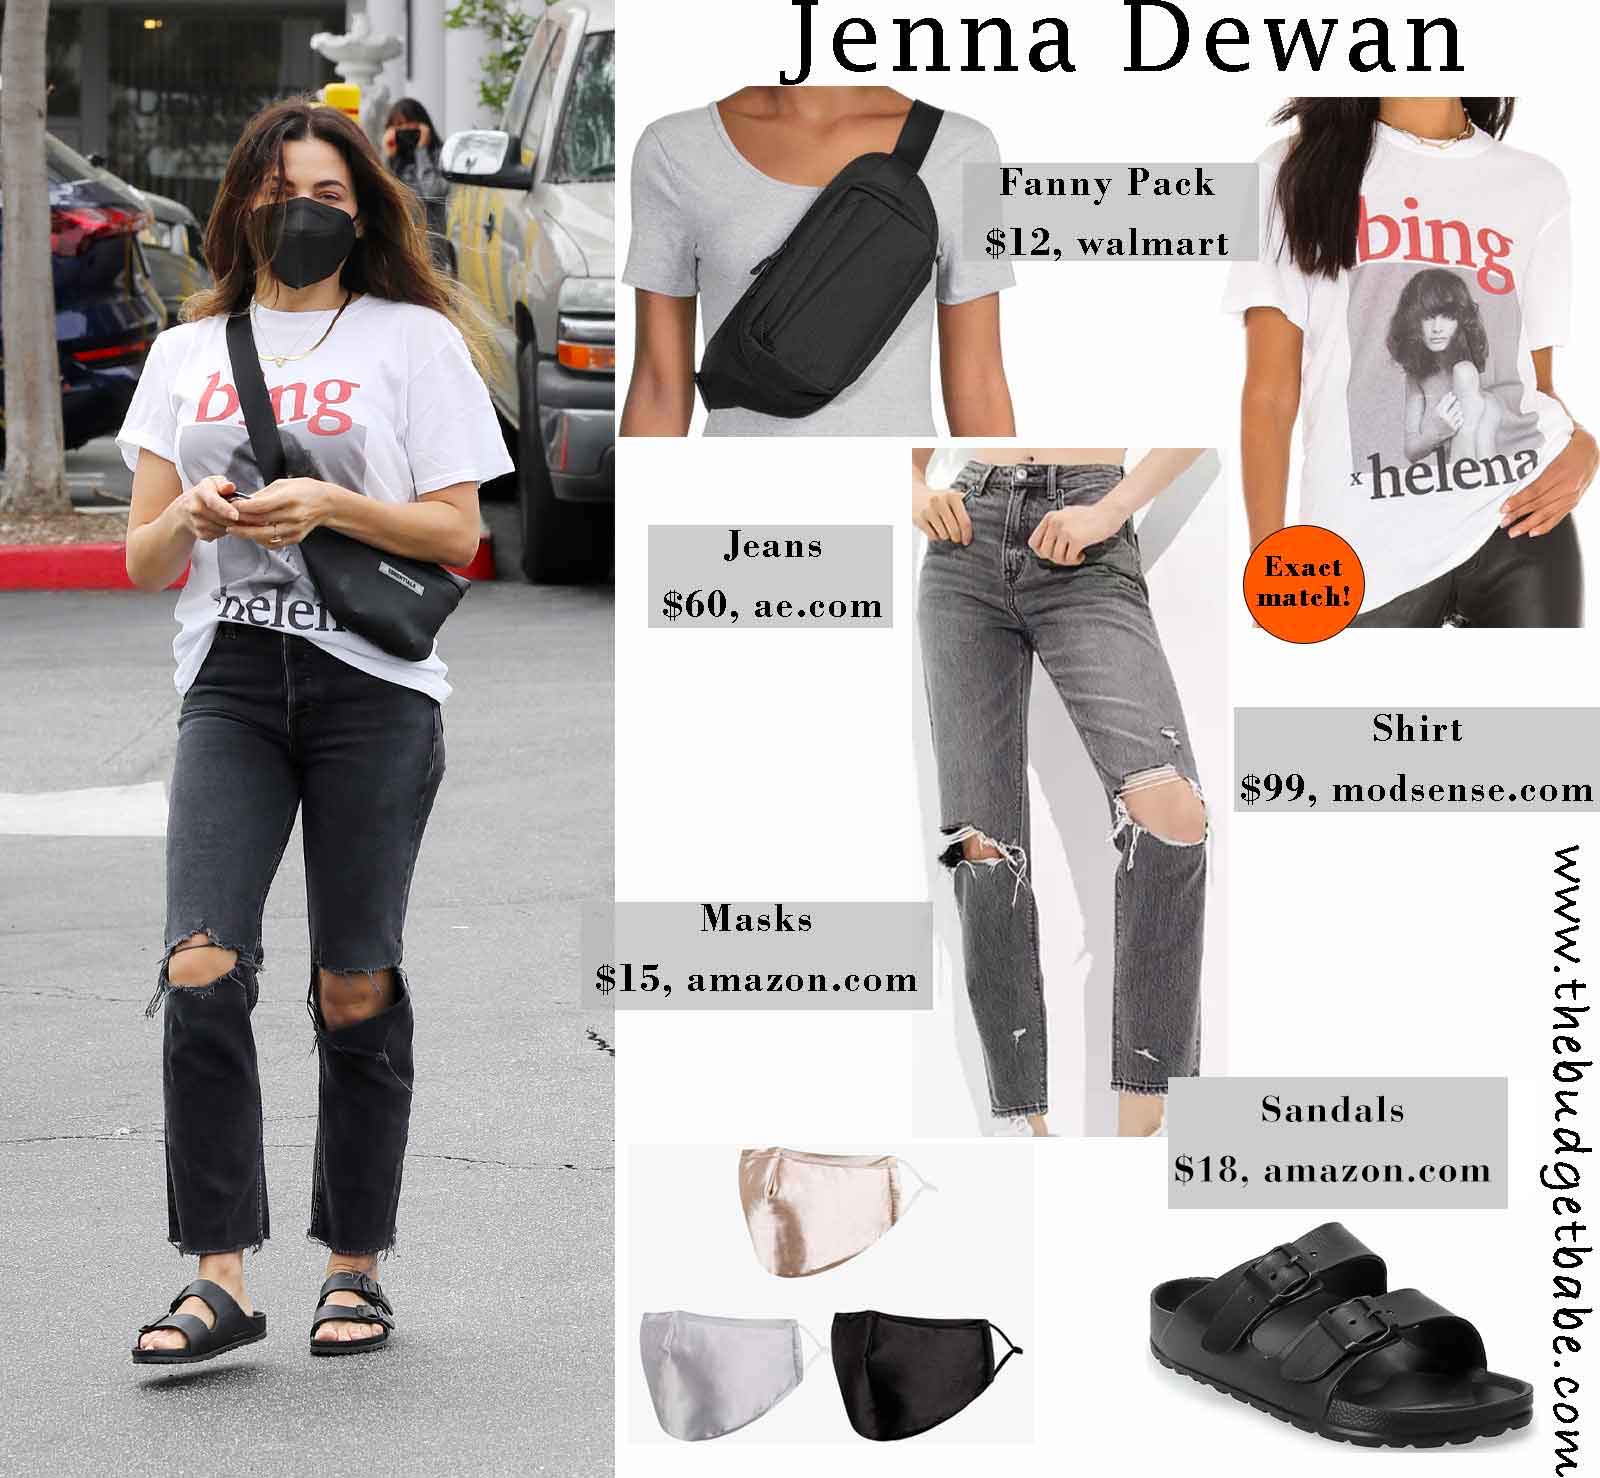 The Look for Less: Jenna Dewan's Designer Tee and Destroyed Denim